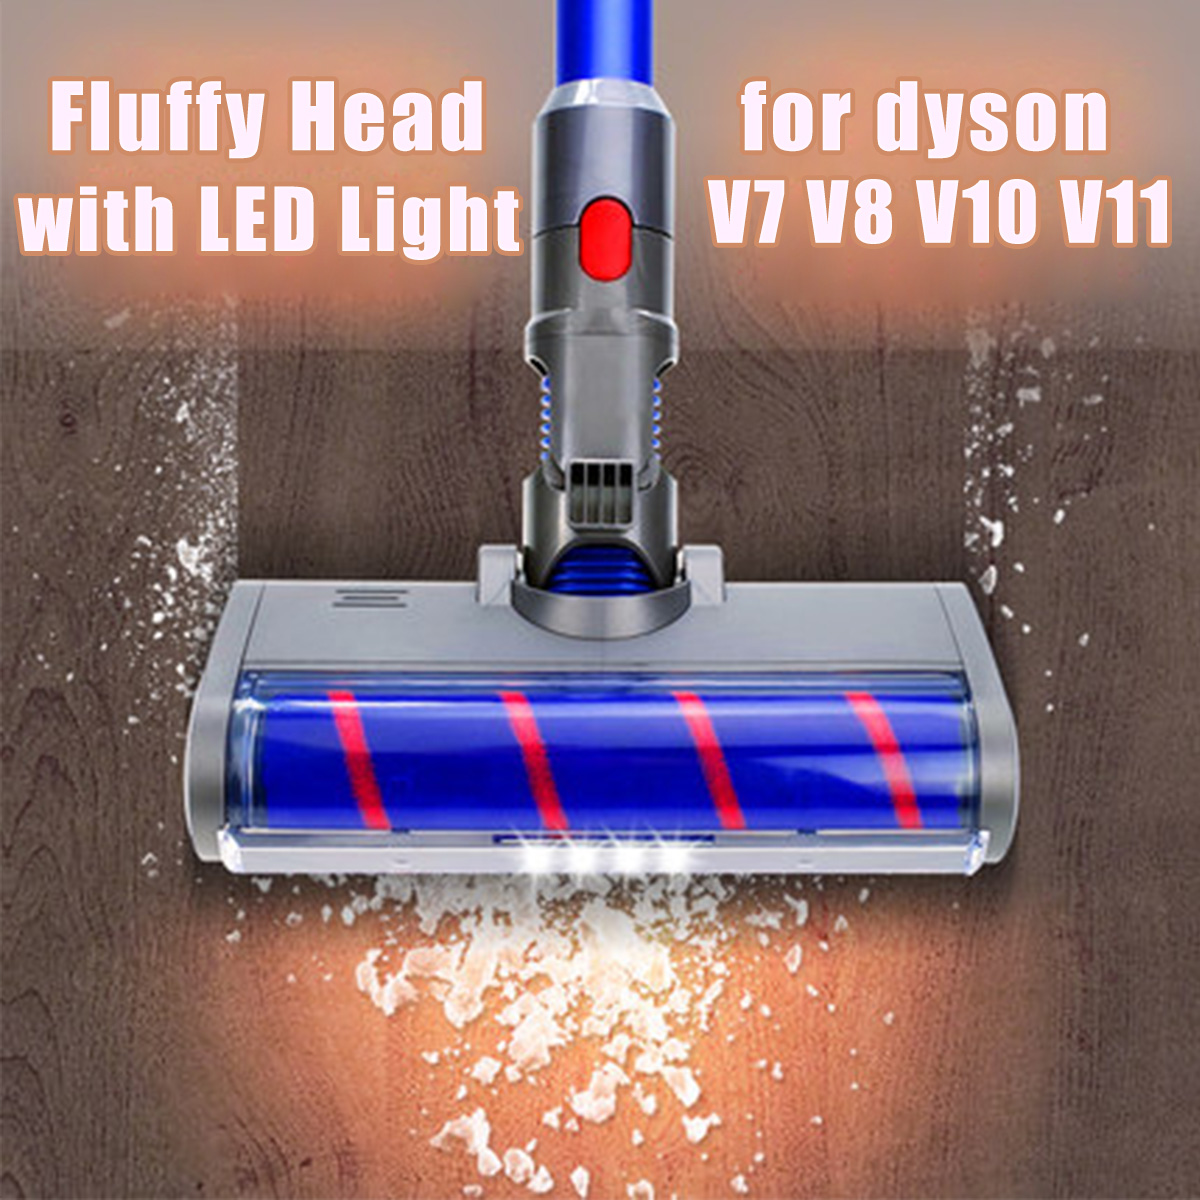 1pcs-Roller-Brush-Replacements-for-DysonV7-V8-V10-V11-Vacuum-Cleaner-Parts-Accessories-1744474-1